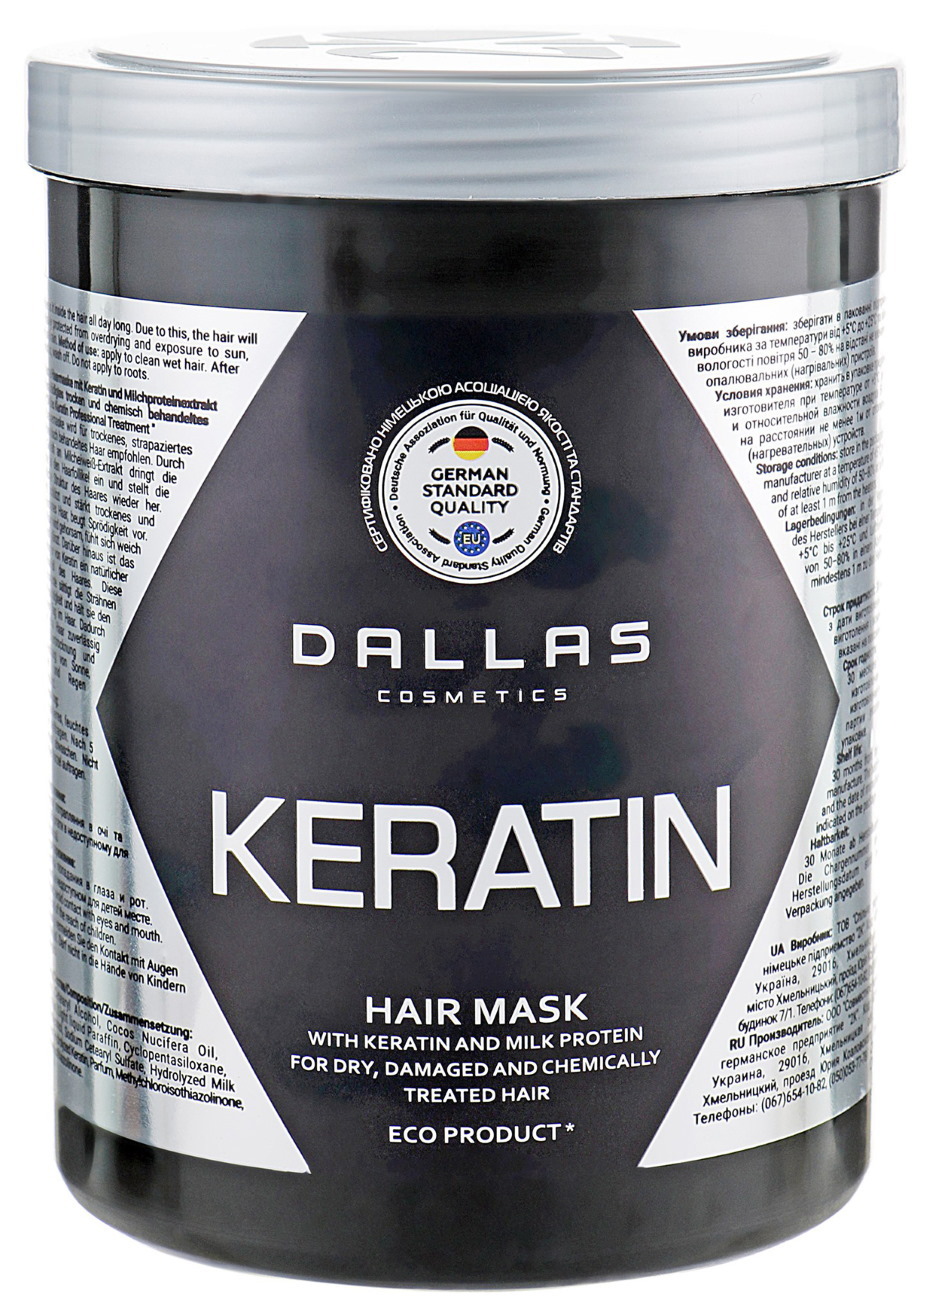 Маска для волос keratin отзывы. Маска для волос Dallas Pro-Tox. Dallas маска кератин. Даллас маска для волос кератин. Hair Pro Tox Dallas маска.